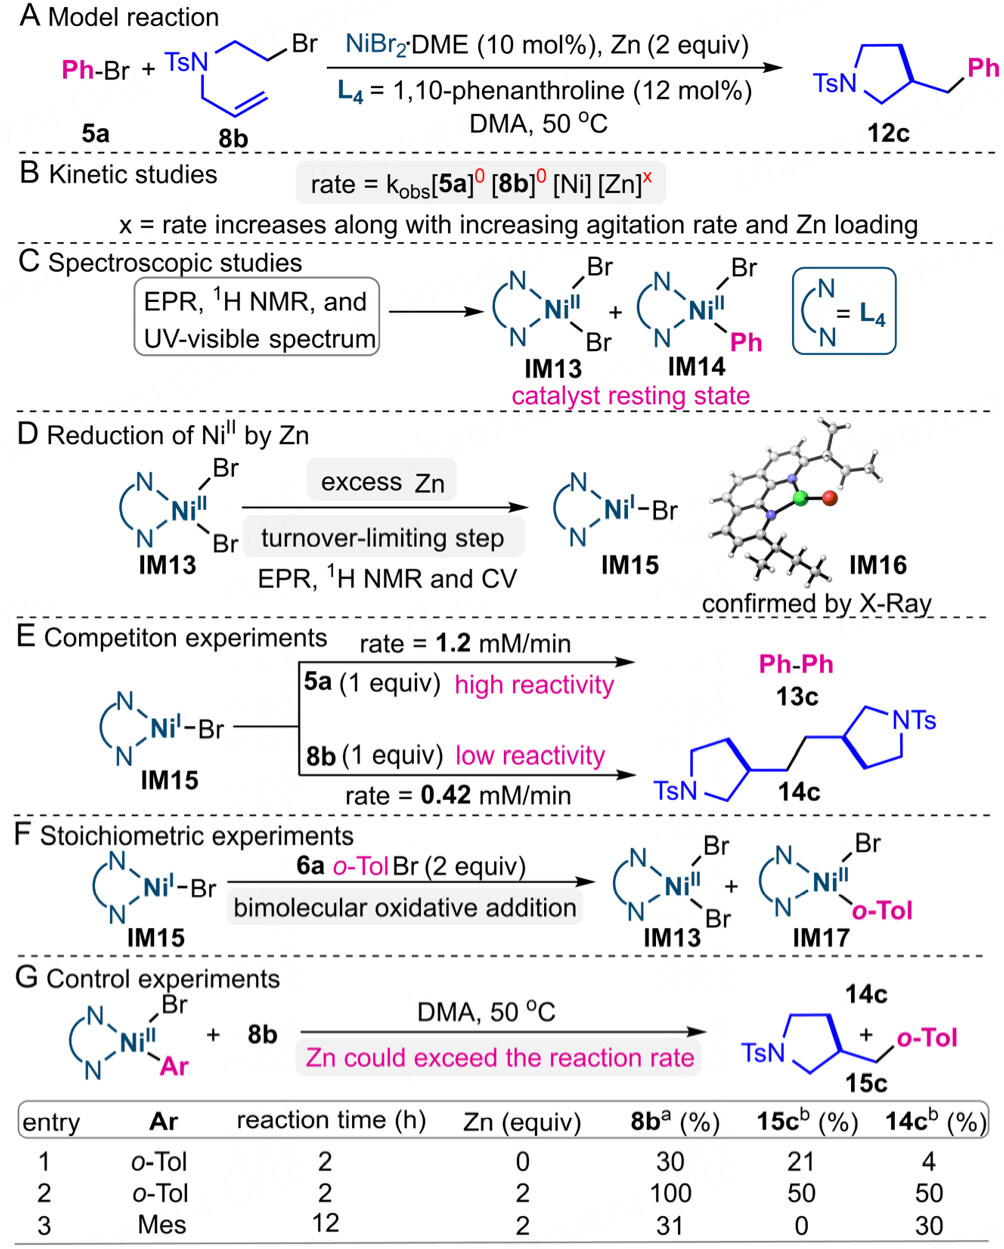 Mechanisms of nickel-catalyzed reductive cross-coupling reactions